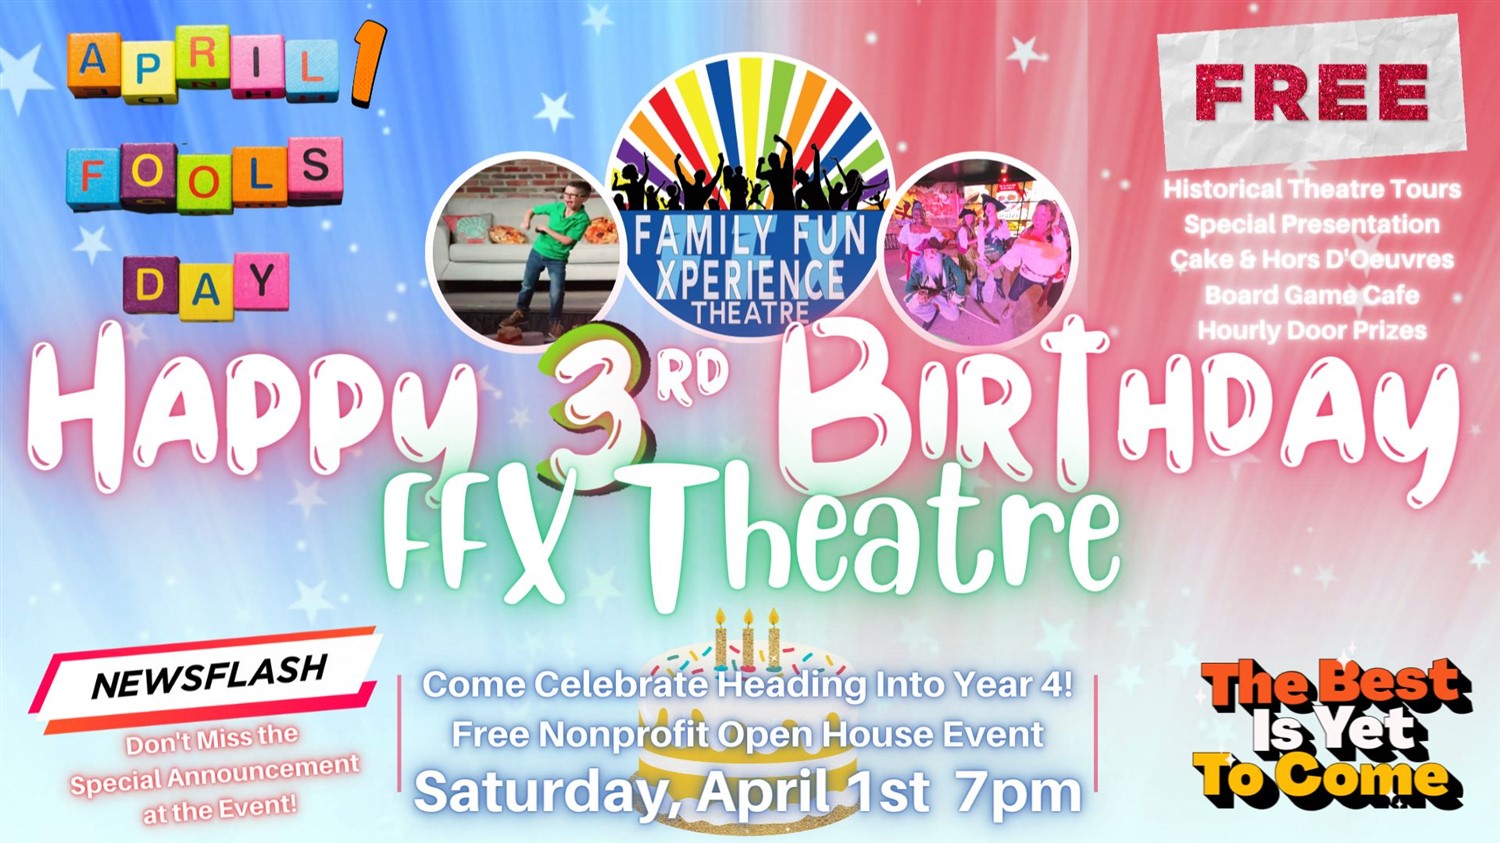 FFX 3rd BIRTHDAY BASH Free Nonprofit Open House Event on avr. 01, 19:00@FFX Theatre - Achetez des billets et obtenez des informations surFamily Fun Xperience tickets.ffxshow.org